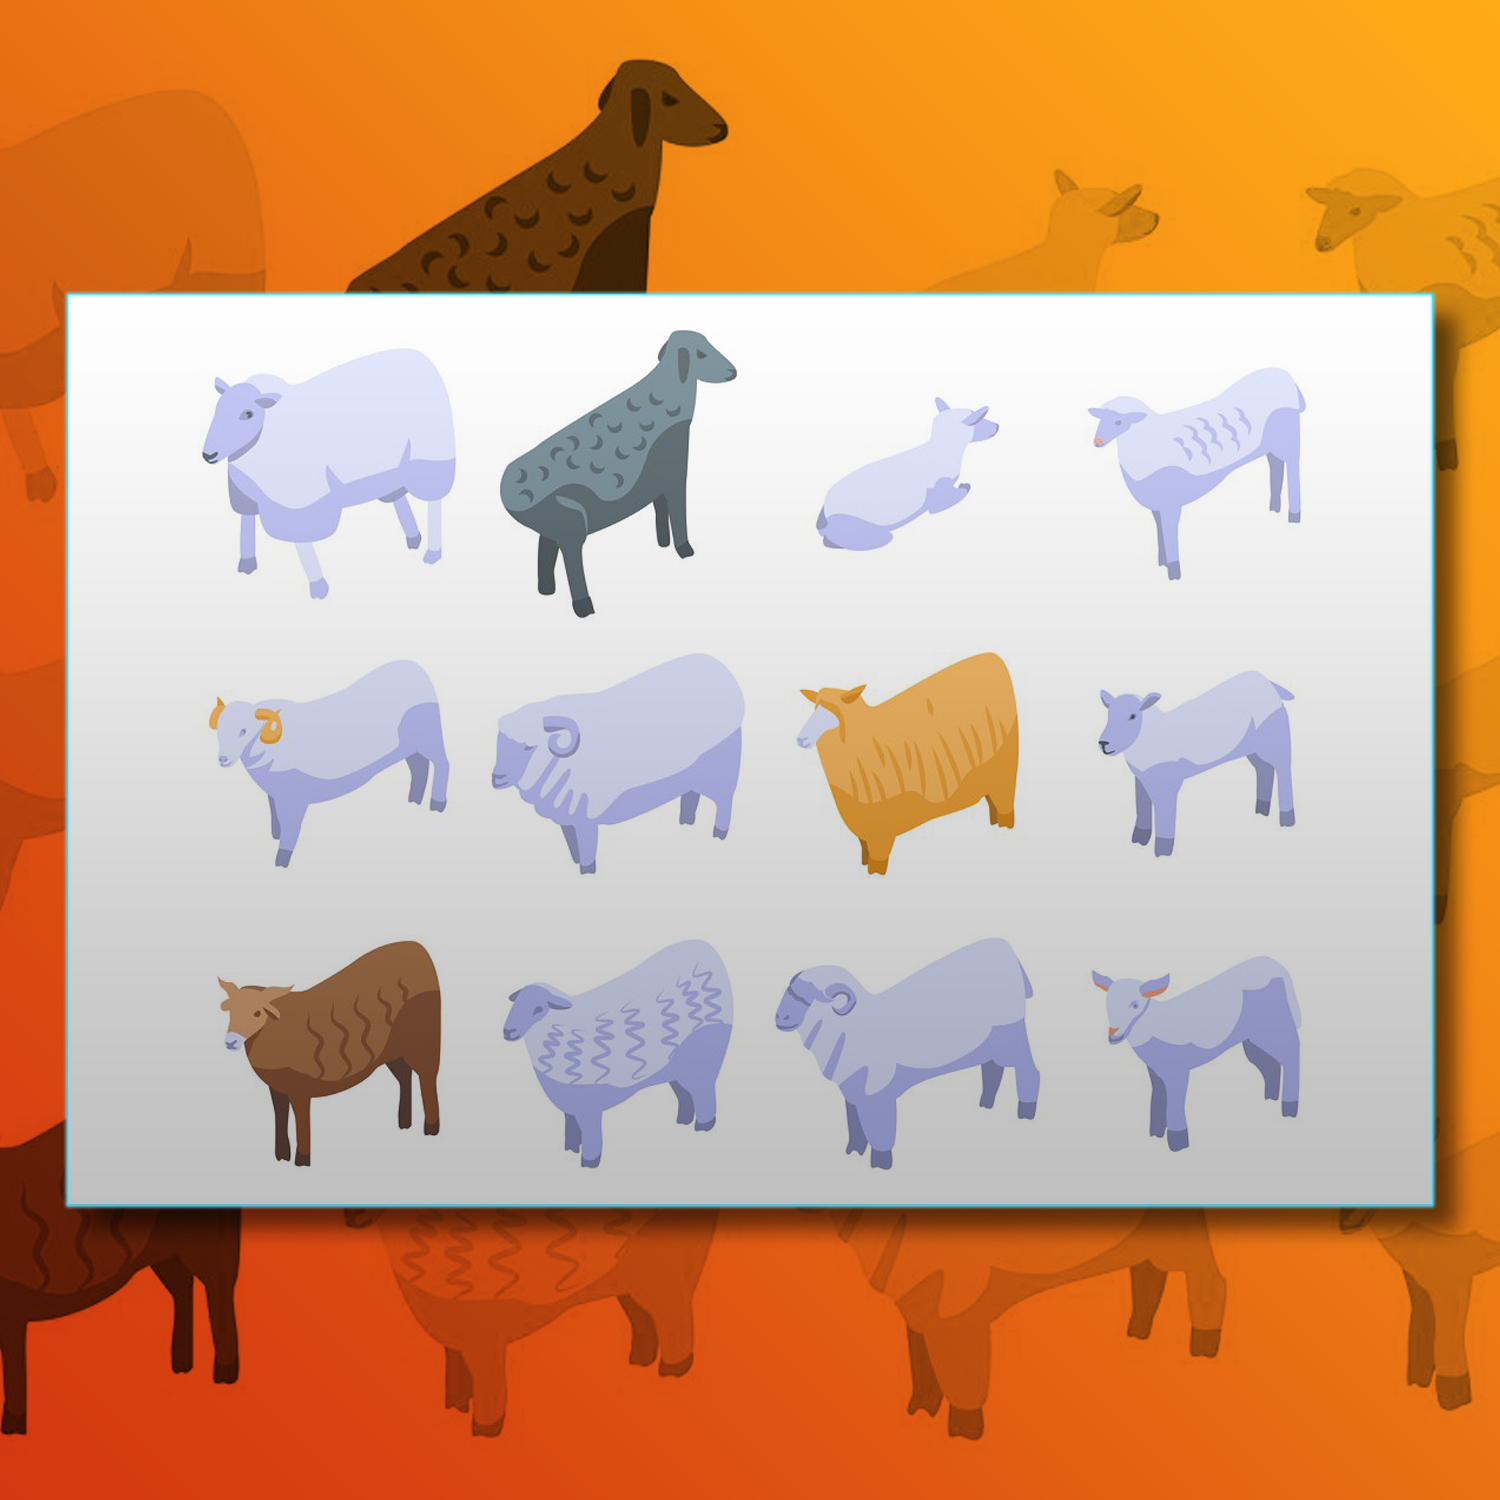 Sheep Icons Set, Isometric Style Main Cover.